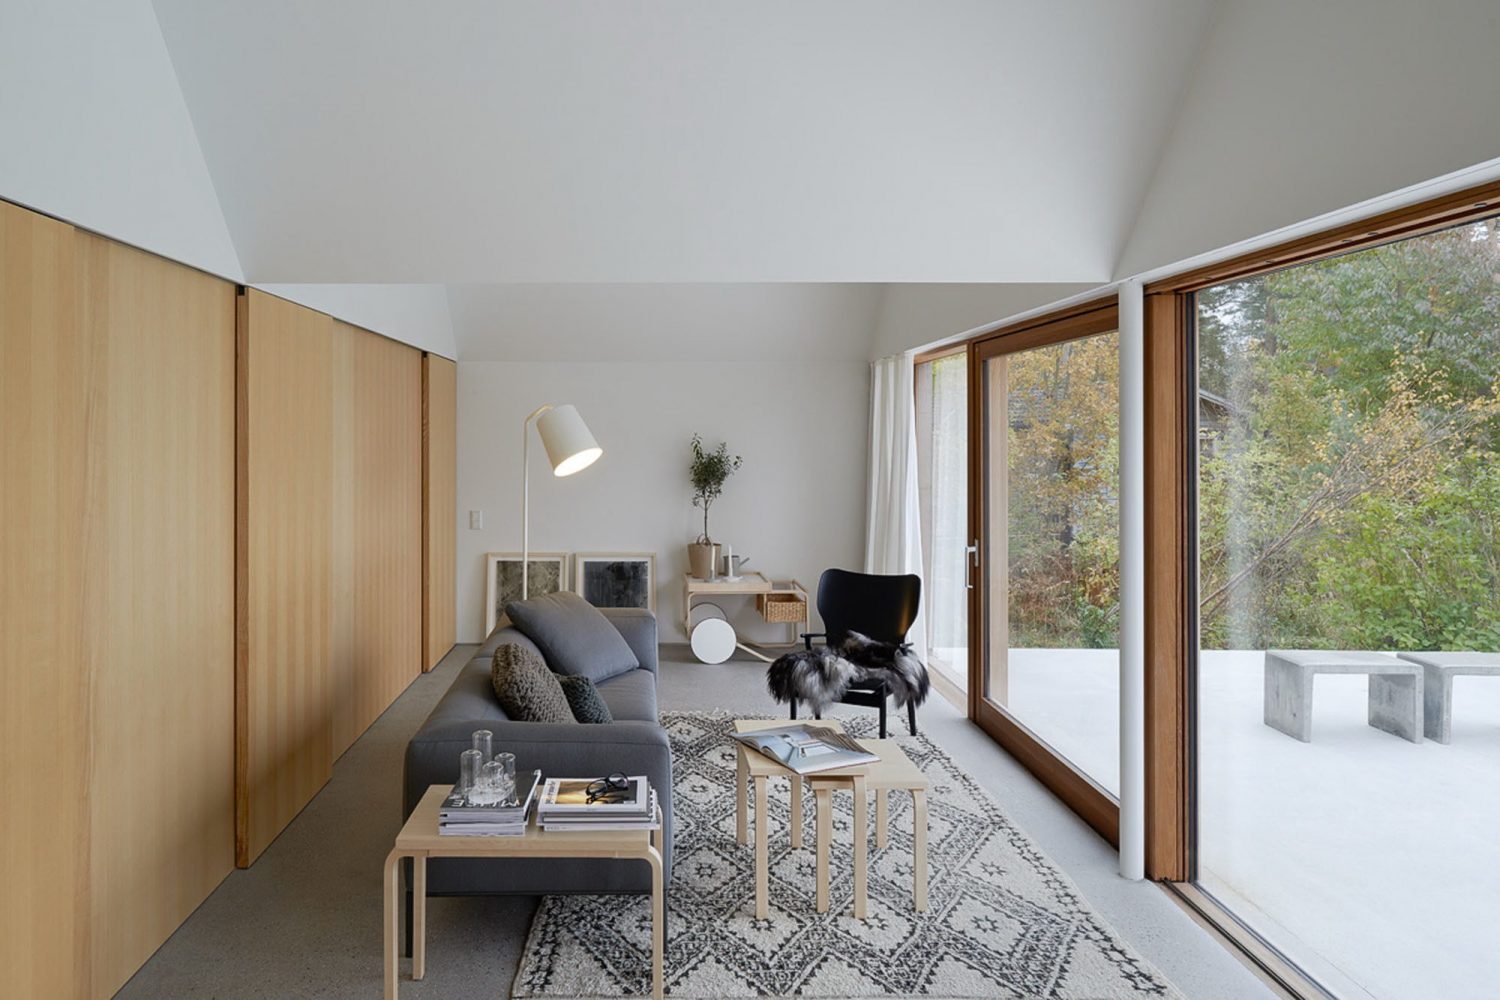 Summerhouse Lagnö by Tham & Videgård Arkitekter